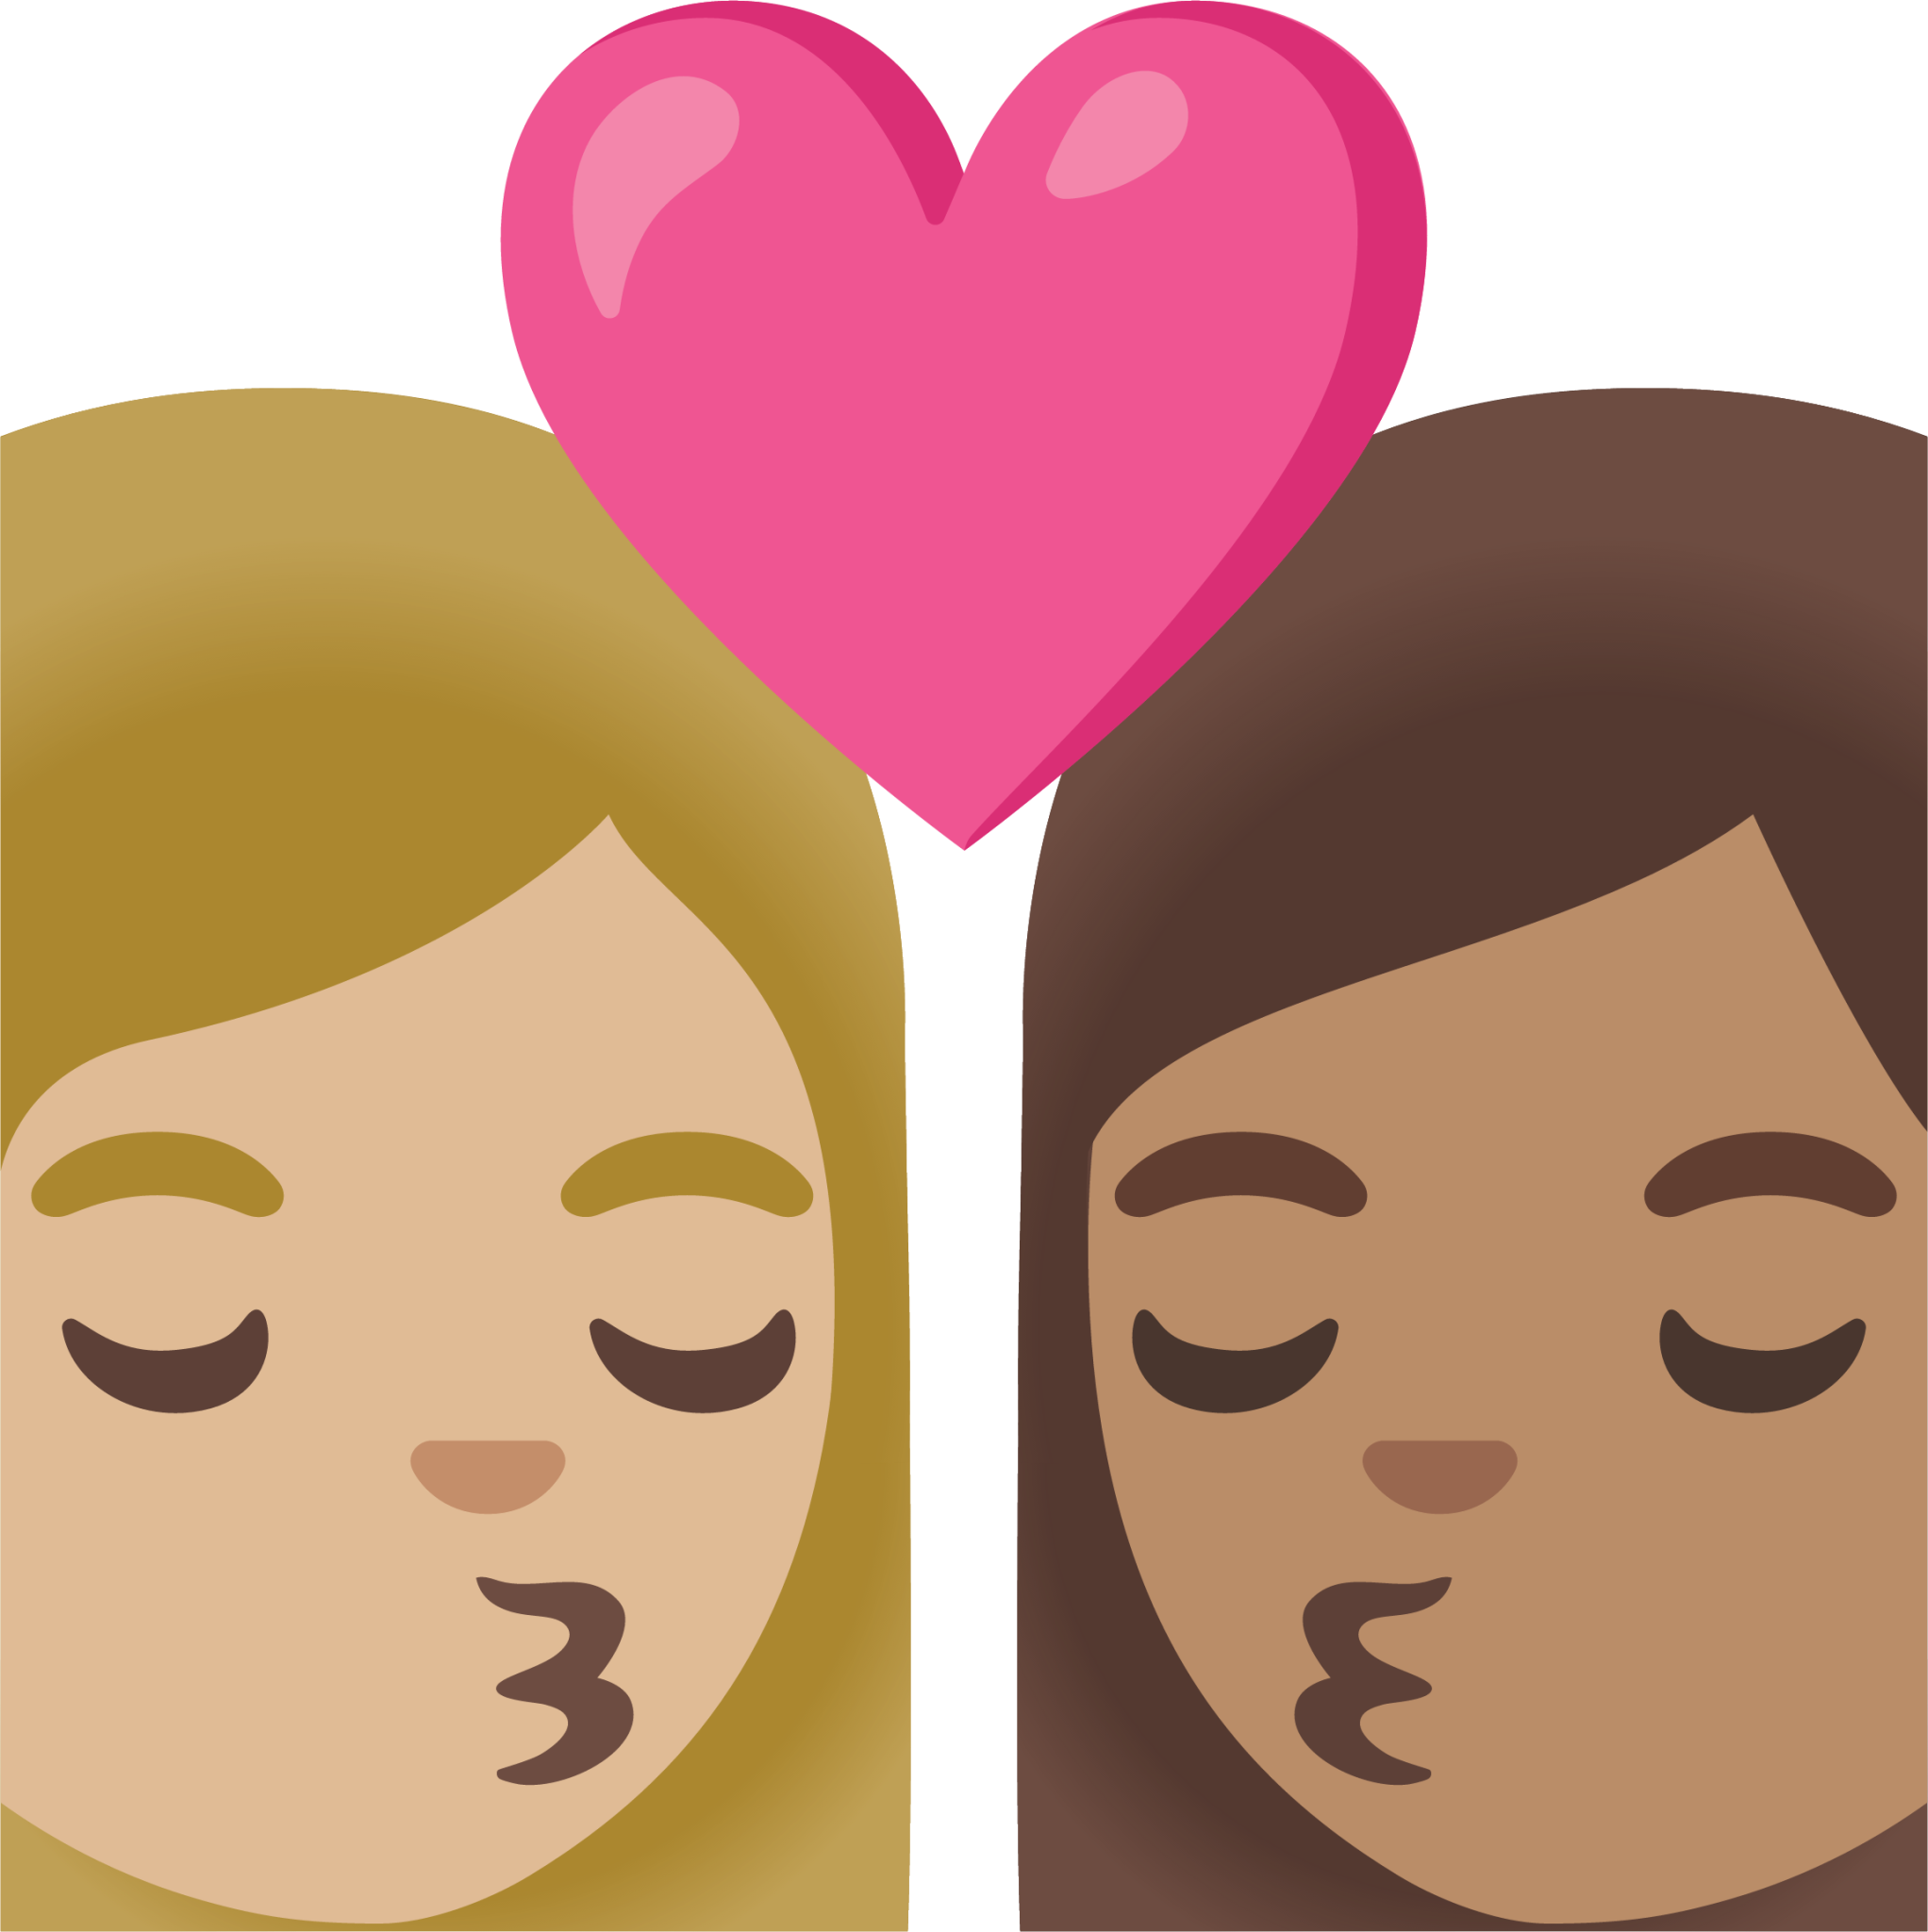 kiss: woman, woman, medium-light skin tone, medium skin tone emoji